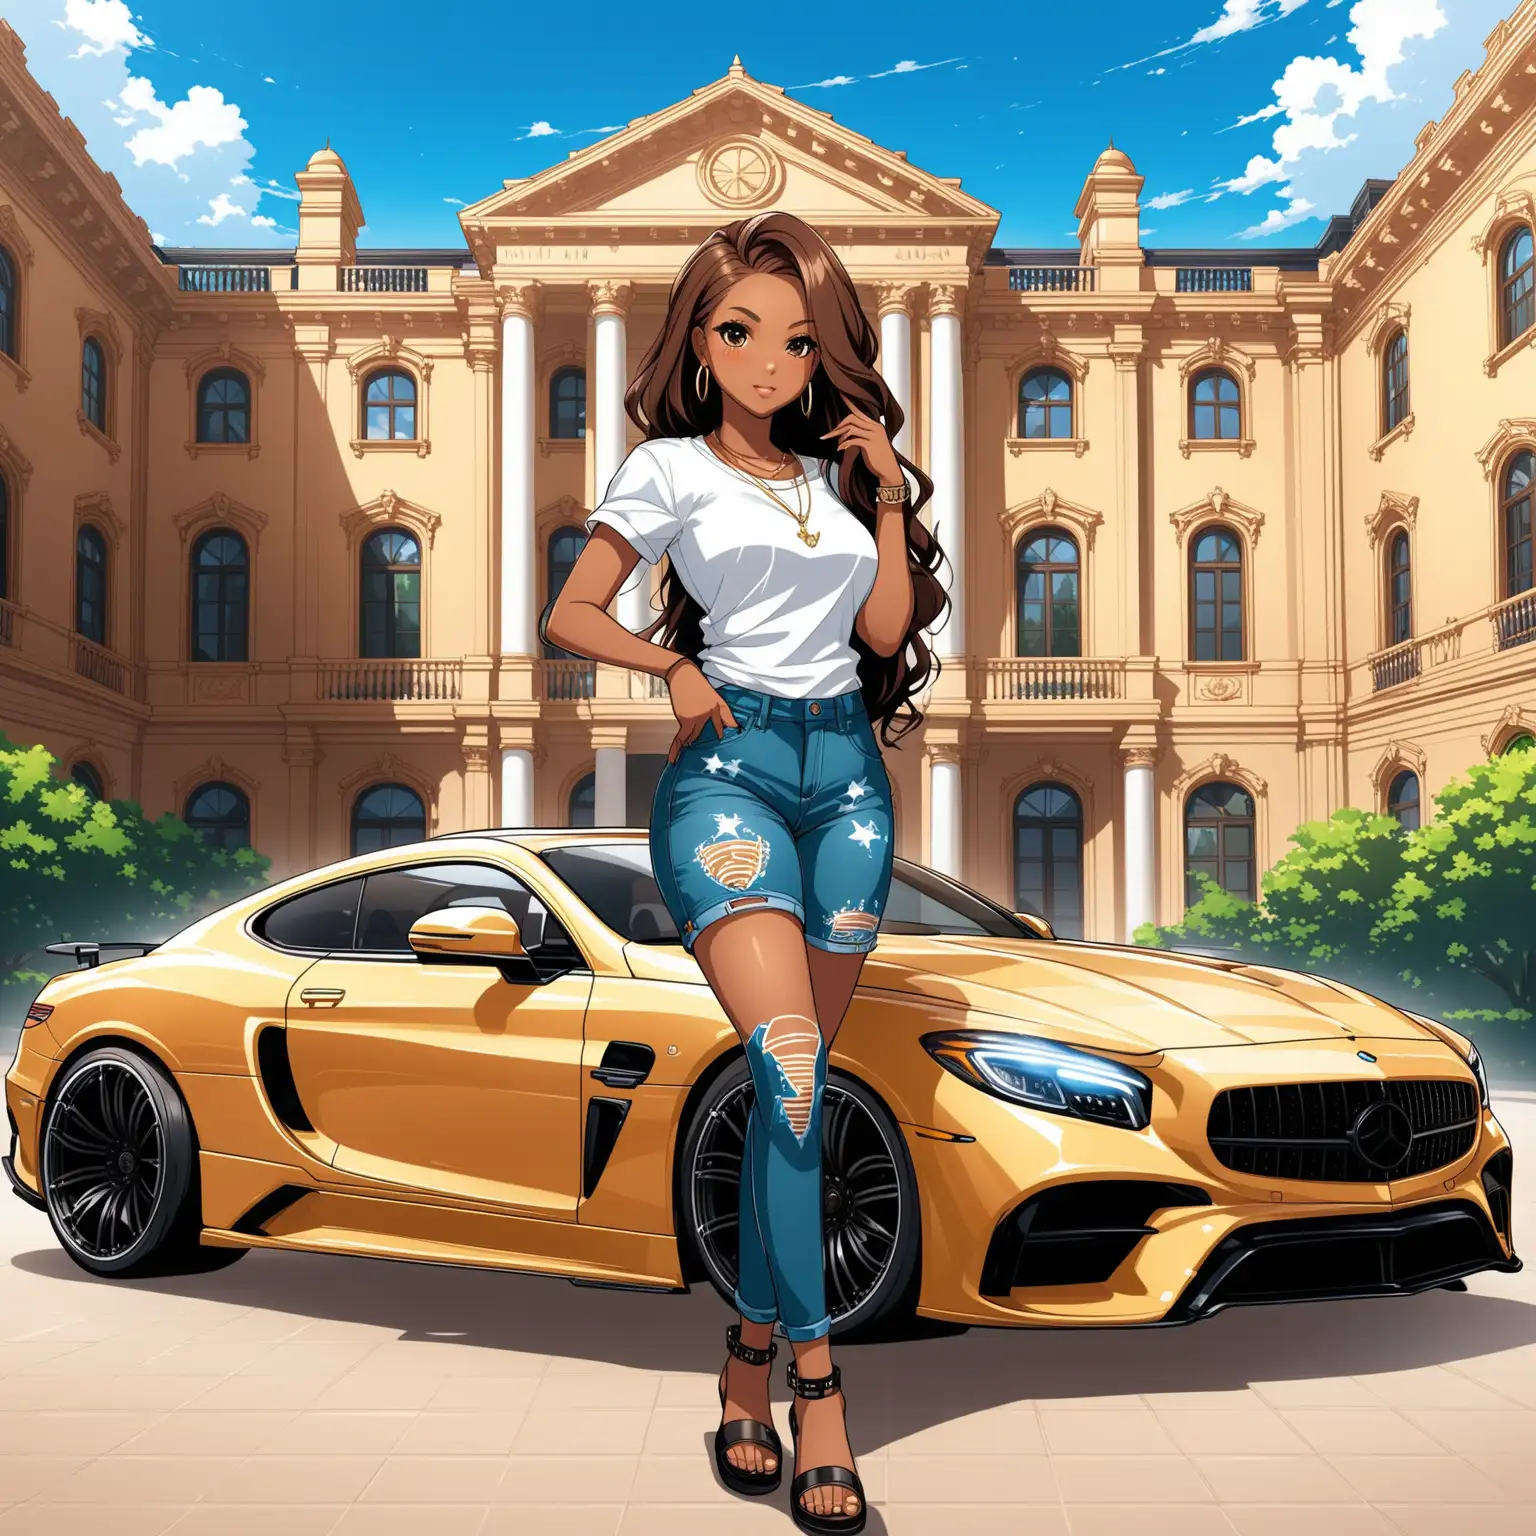 Create anime logo of brown skin urban american girl, urban clothing, in mansion setting, luxury vehicles